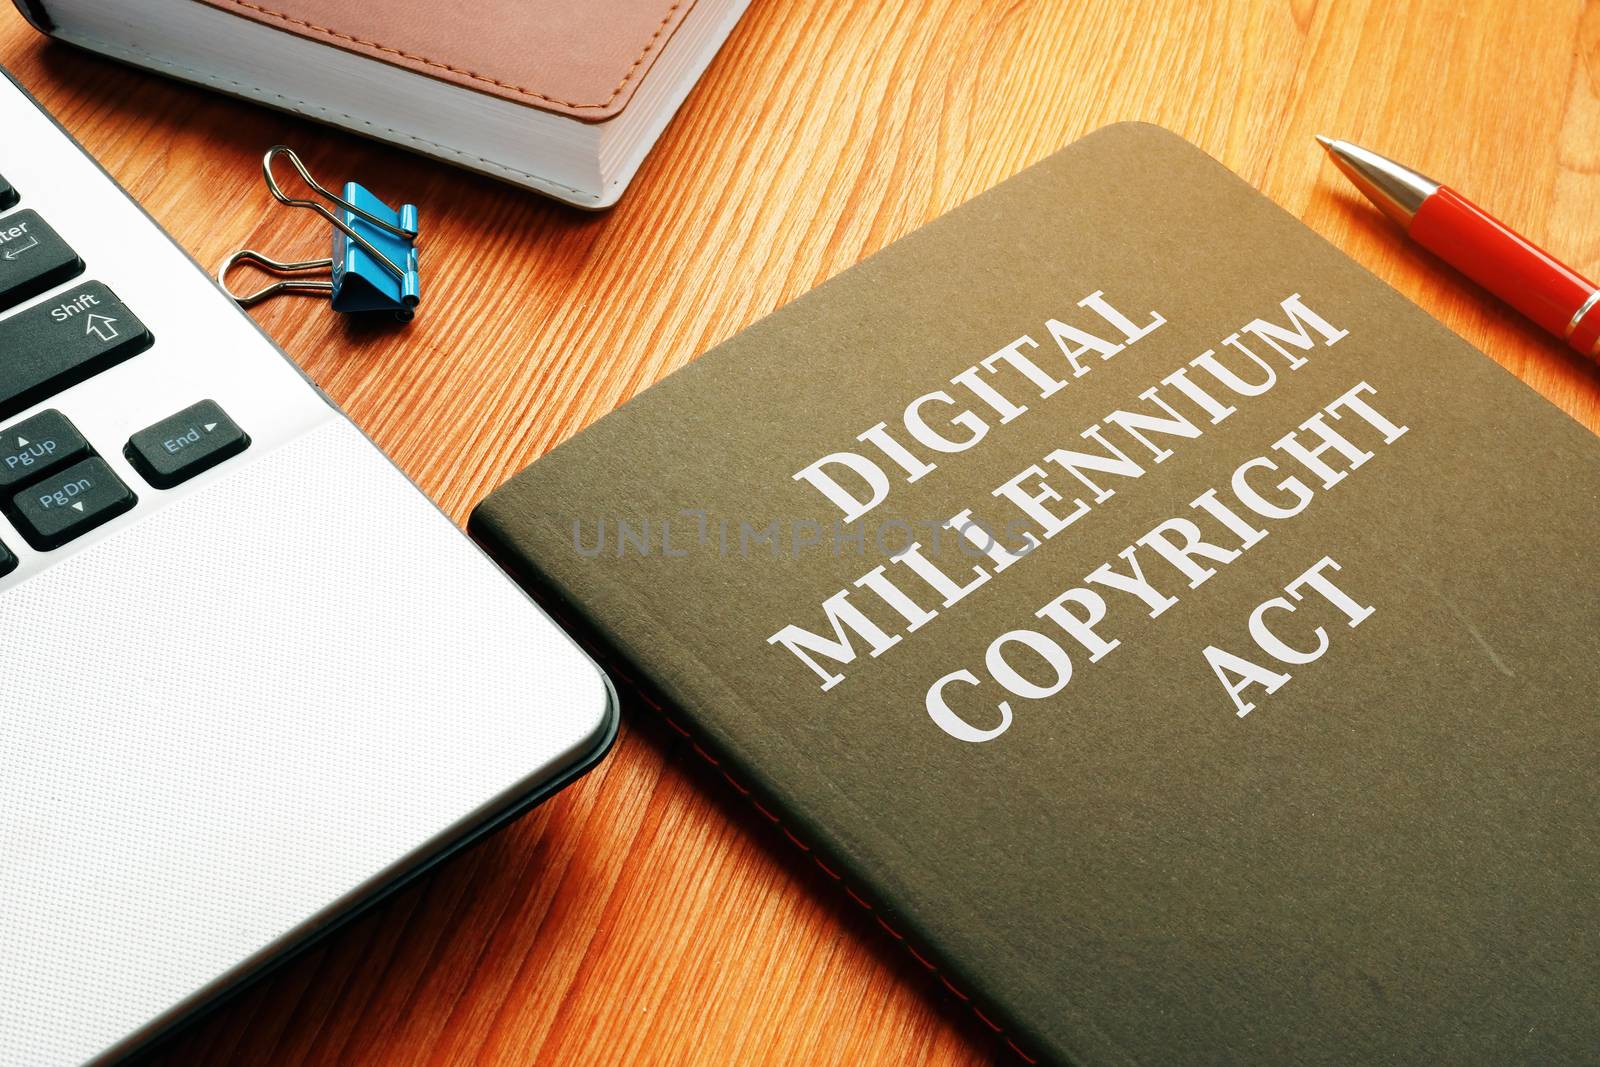 DMCA Digital Millennium Copyright Act and laptop. by designer491